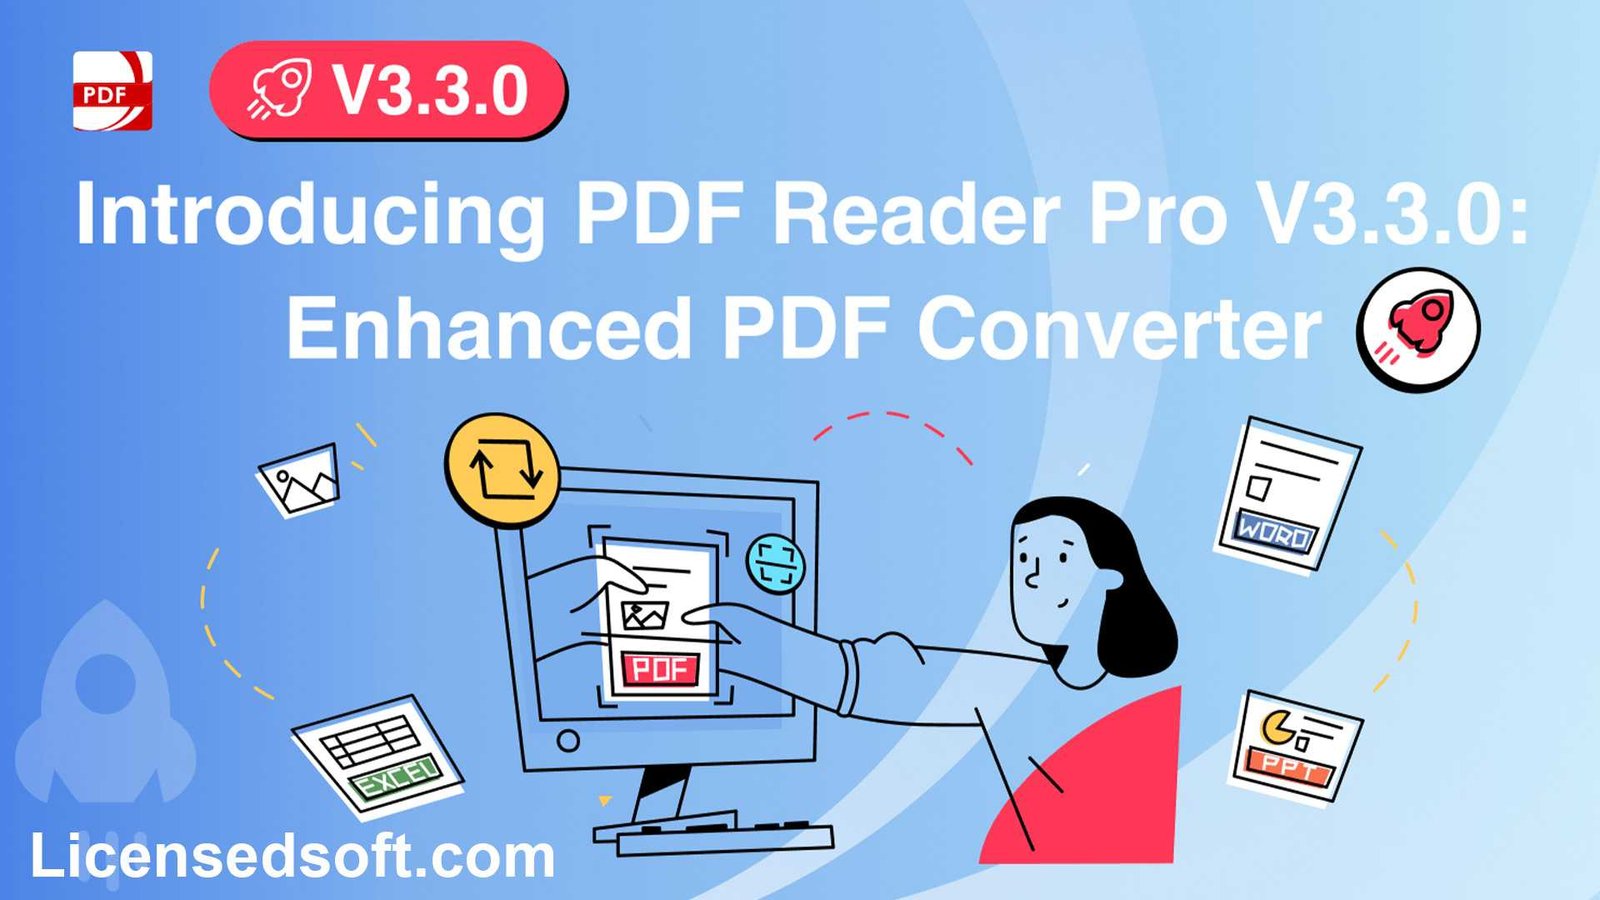 PDF Reader Pro for macOS Lifetime Premium cover photo by licensedsoft.com